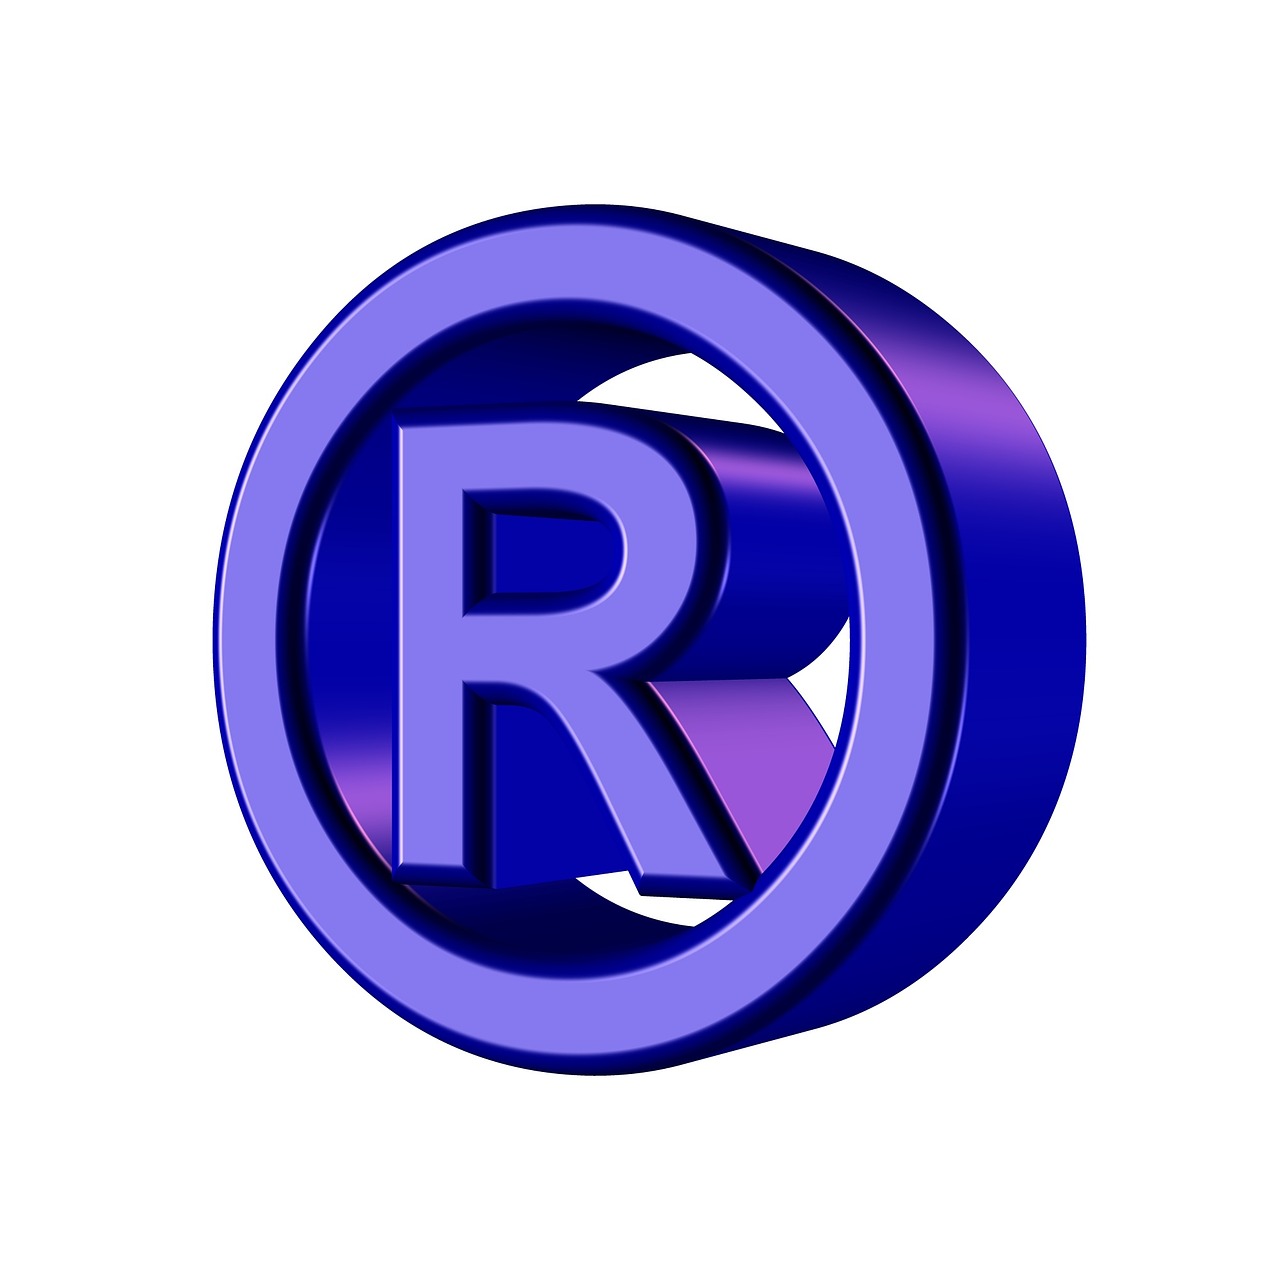 registered trademark symbol free photo